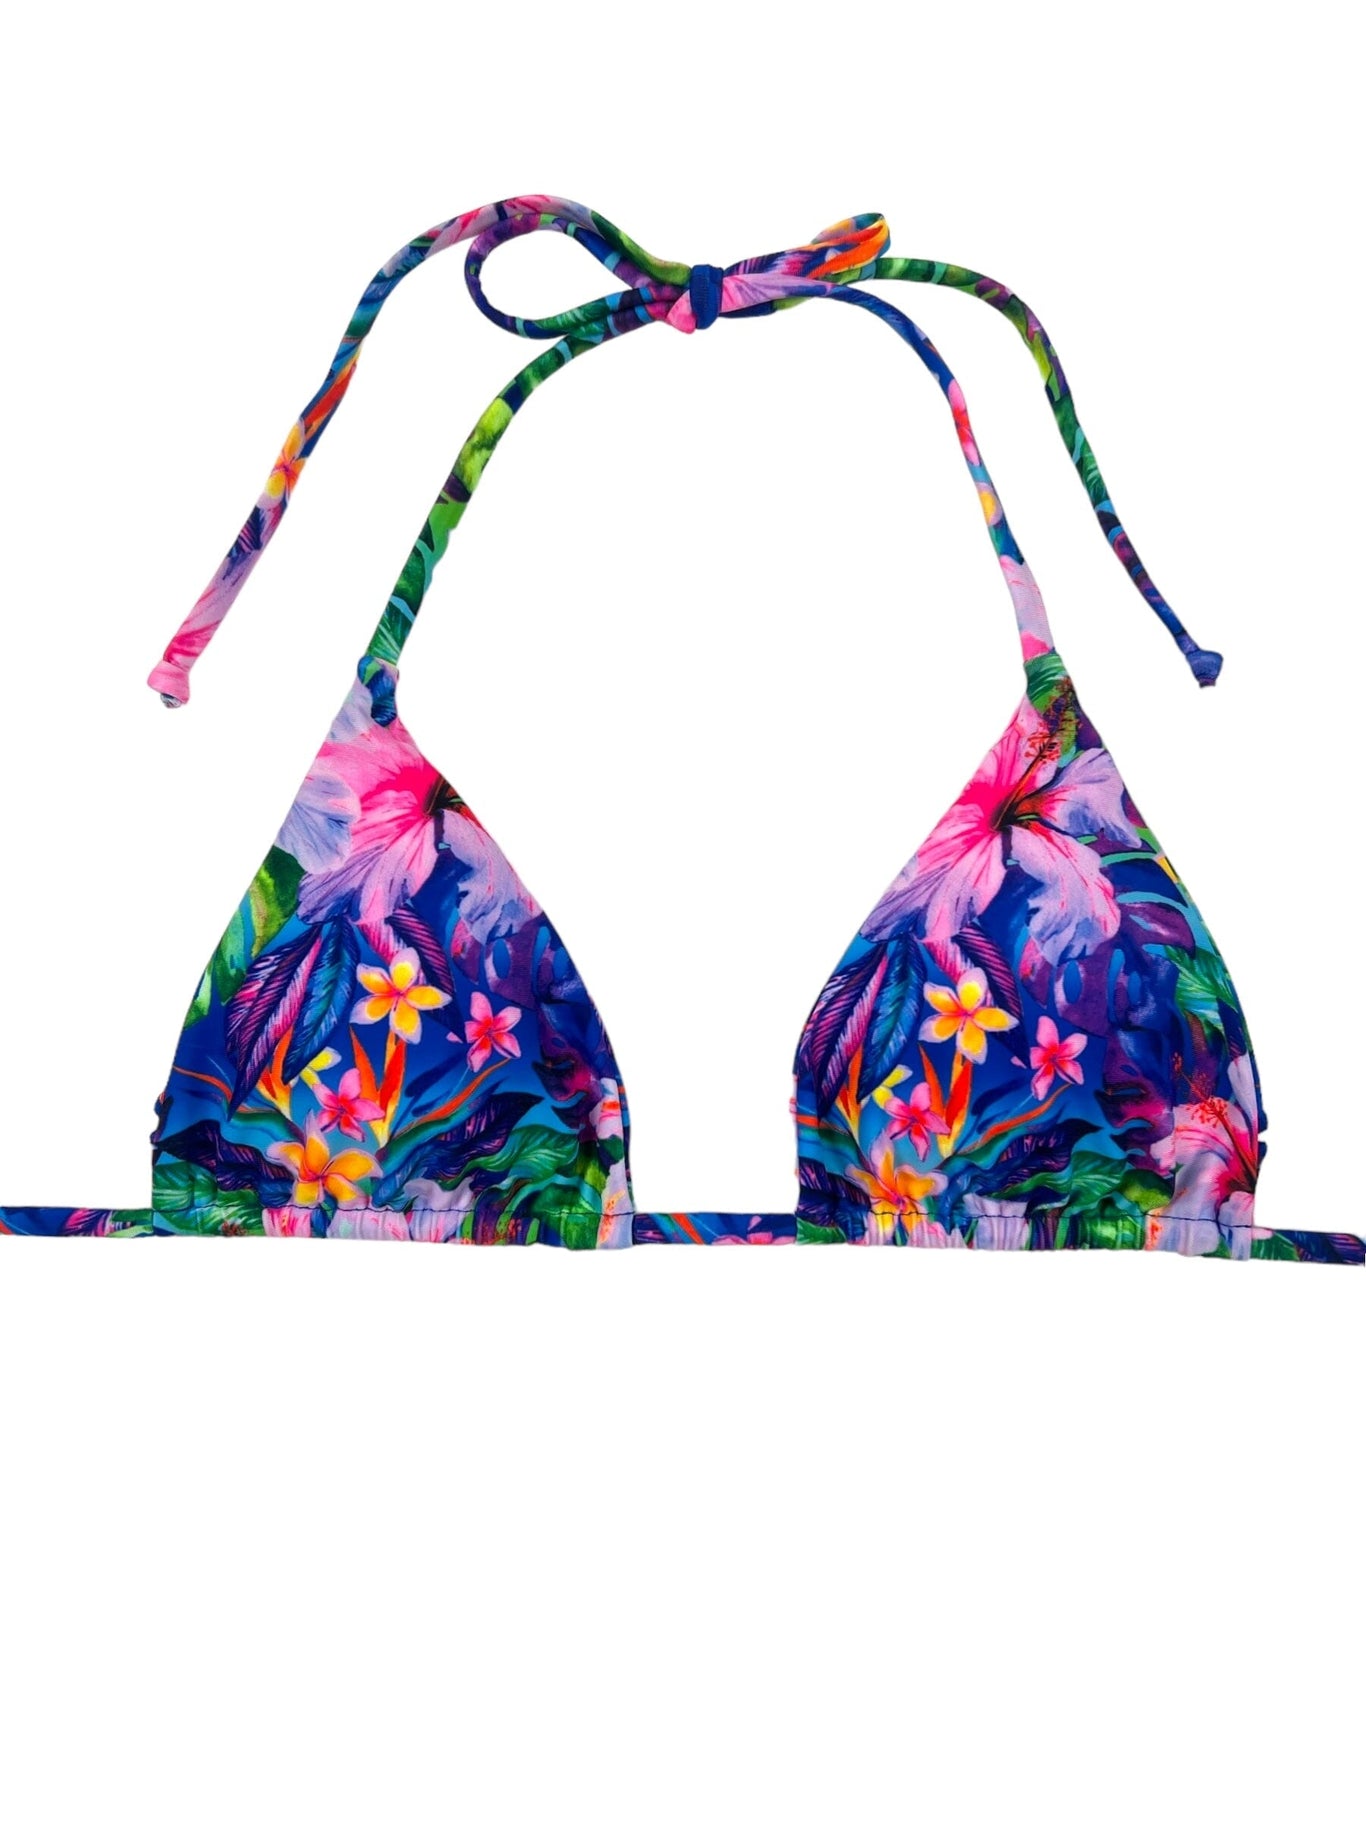 TROPICANA BLISS TRIANGLE TOP - Berry Beachy Swimwear